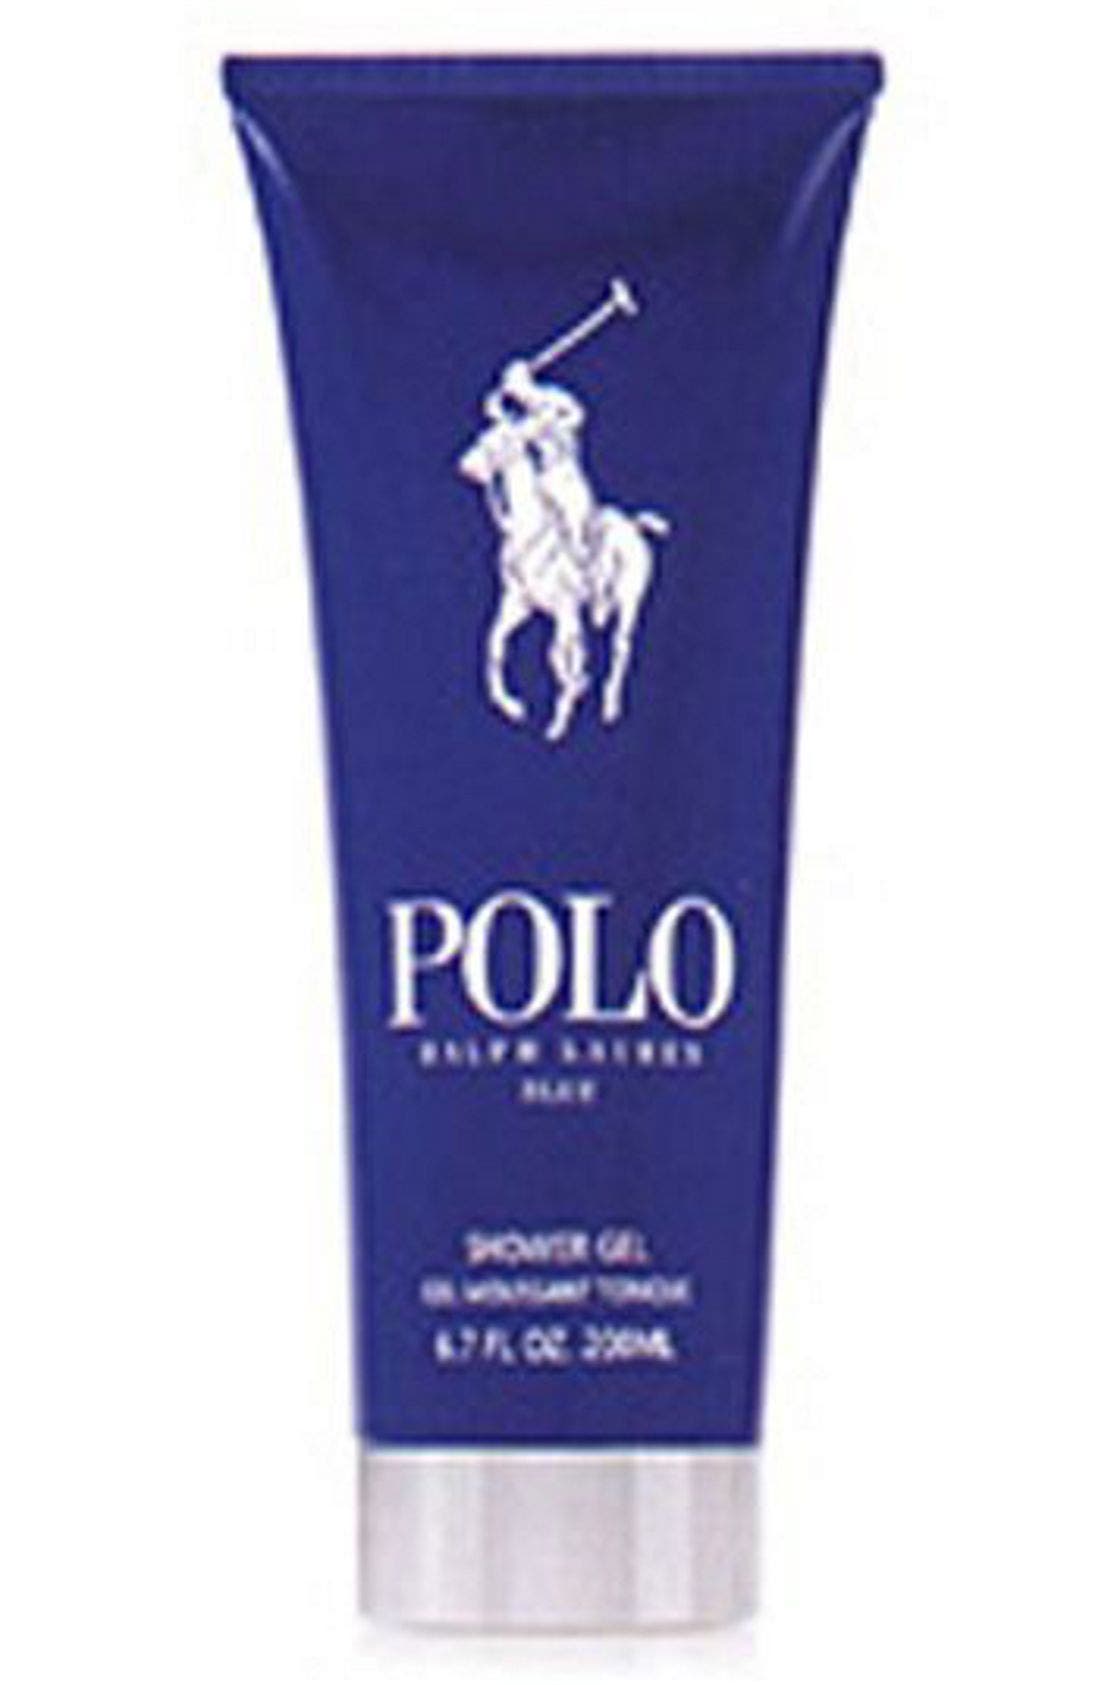 polo body wash